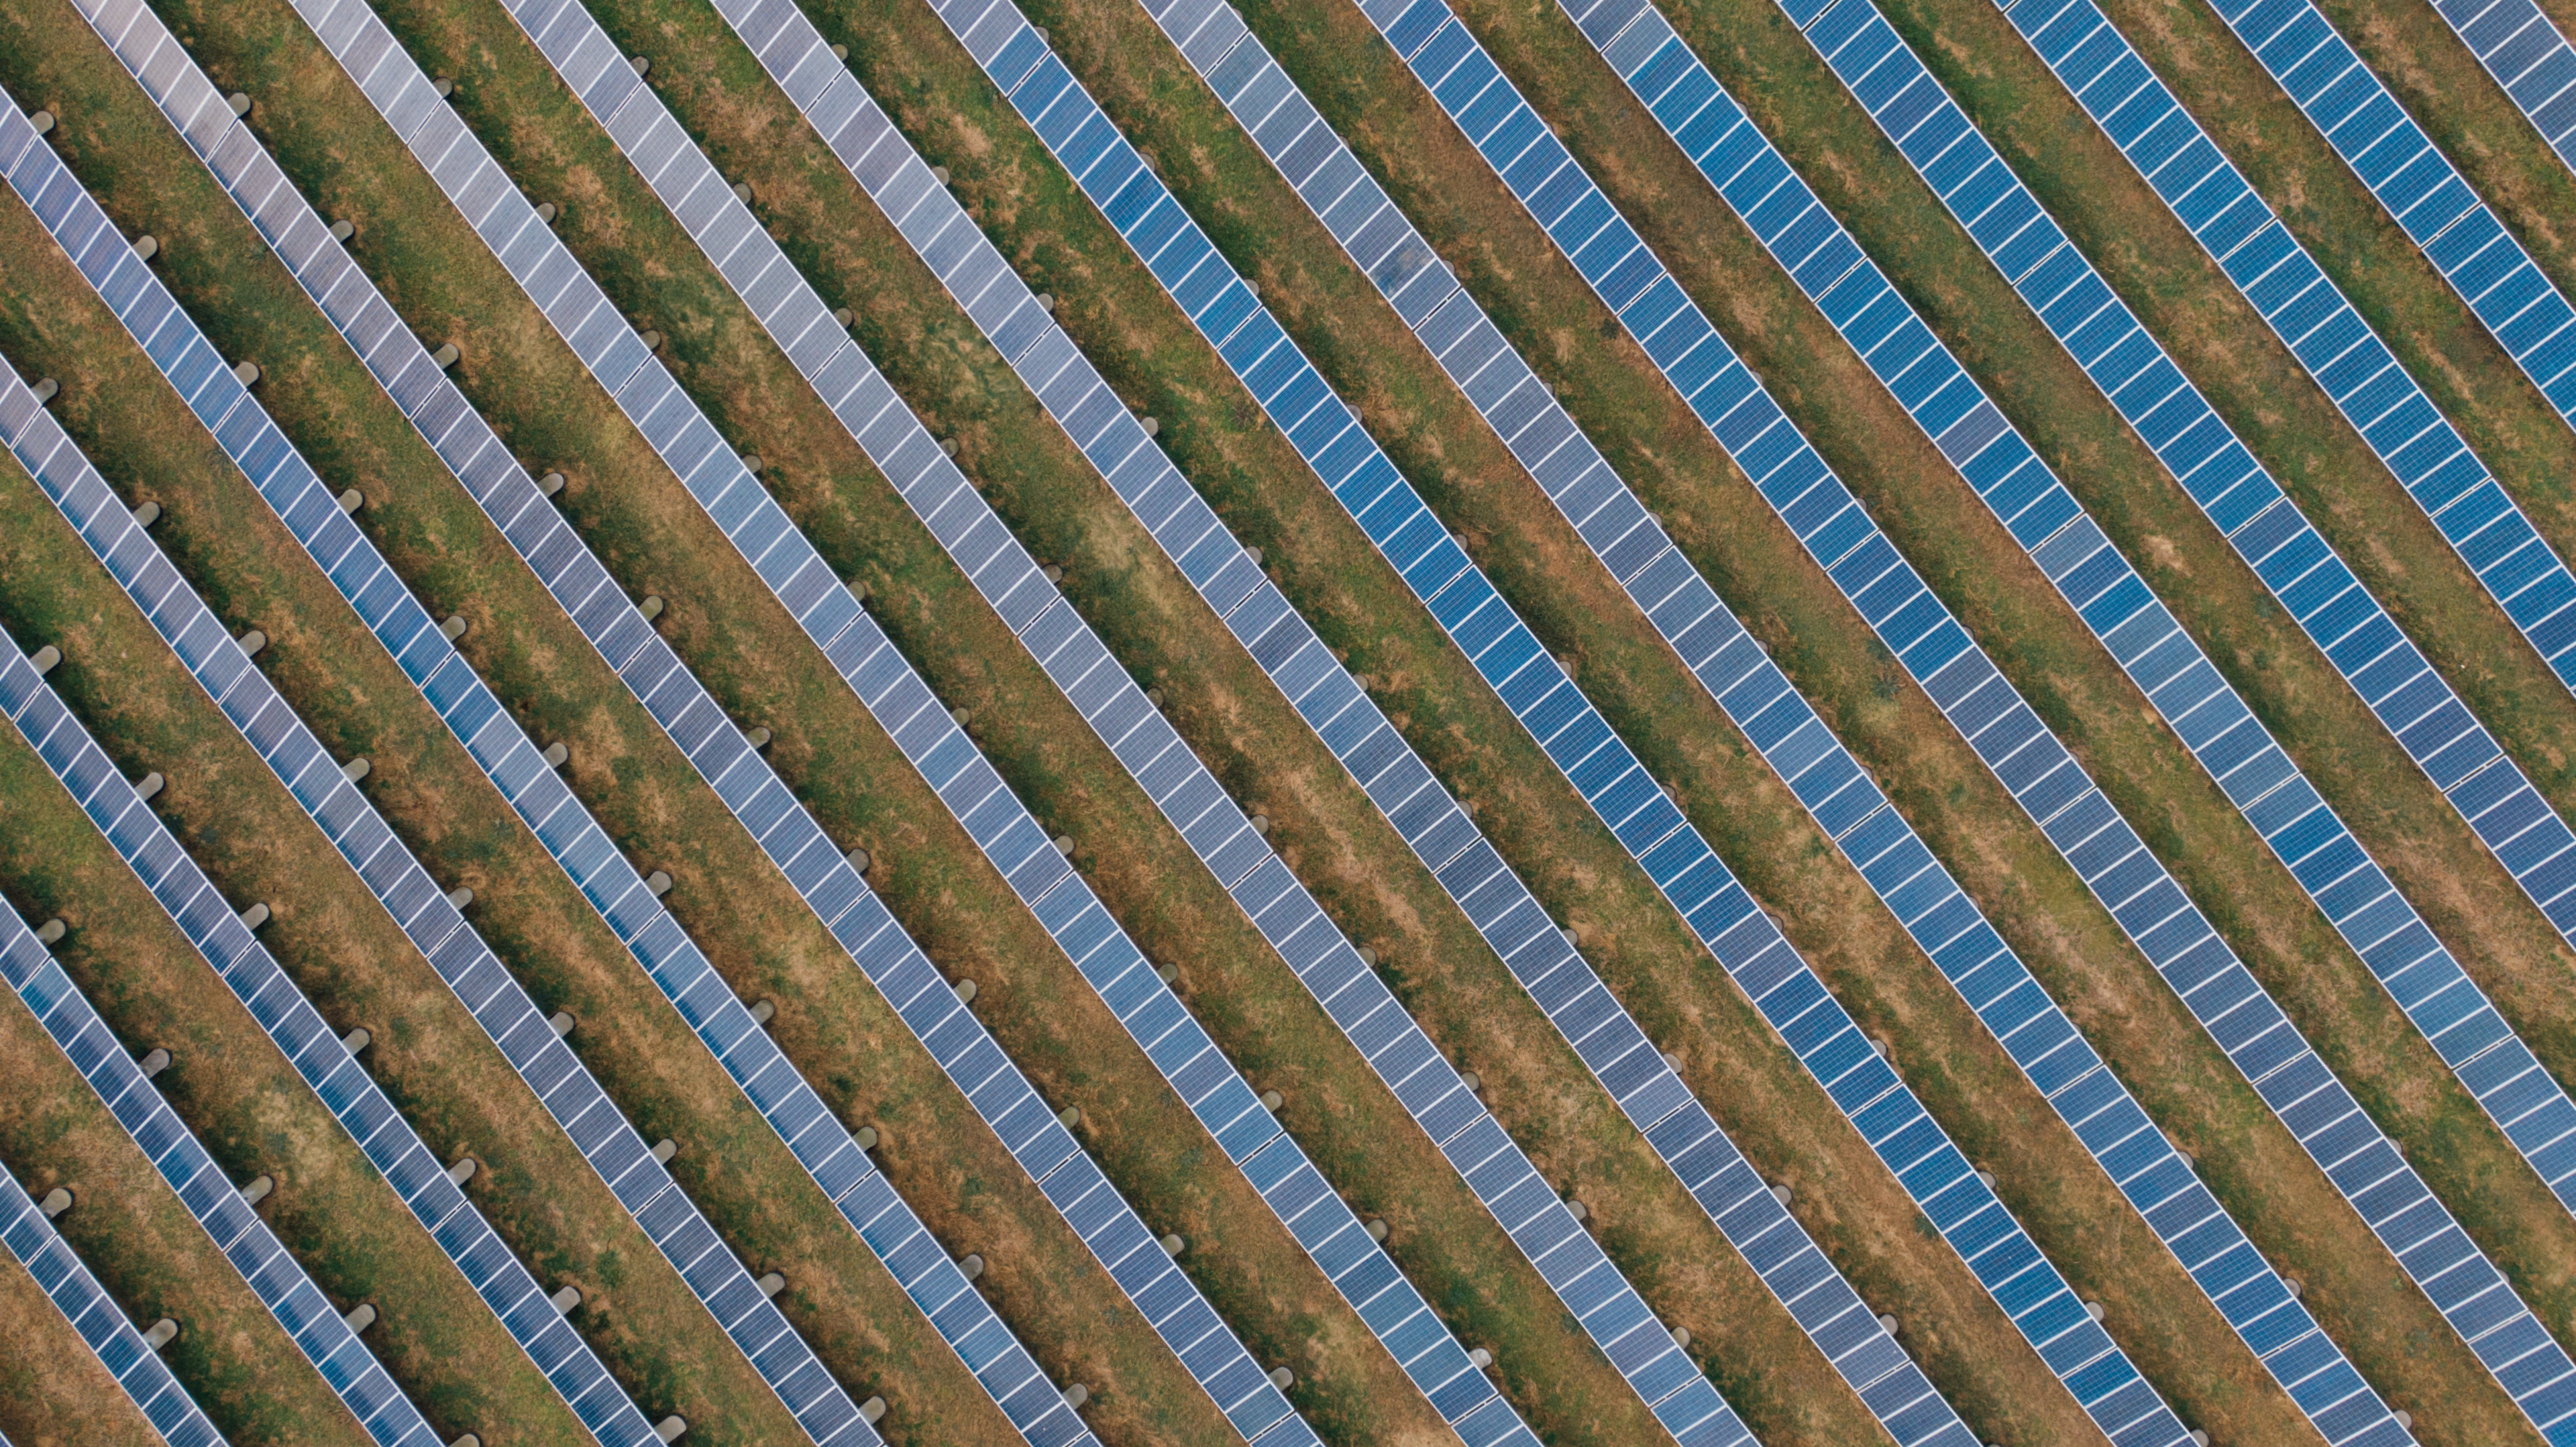 A bird's eye view of a community solar farm. Monthly billing, easy savings.